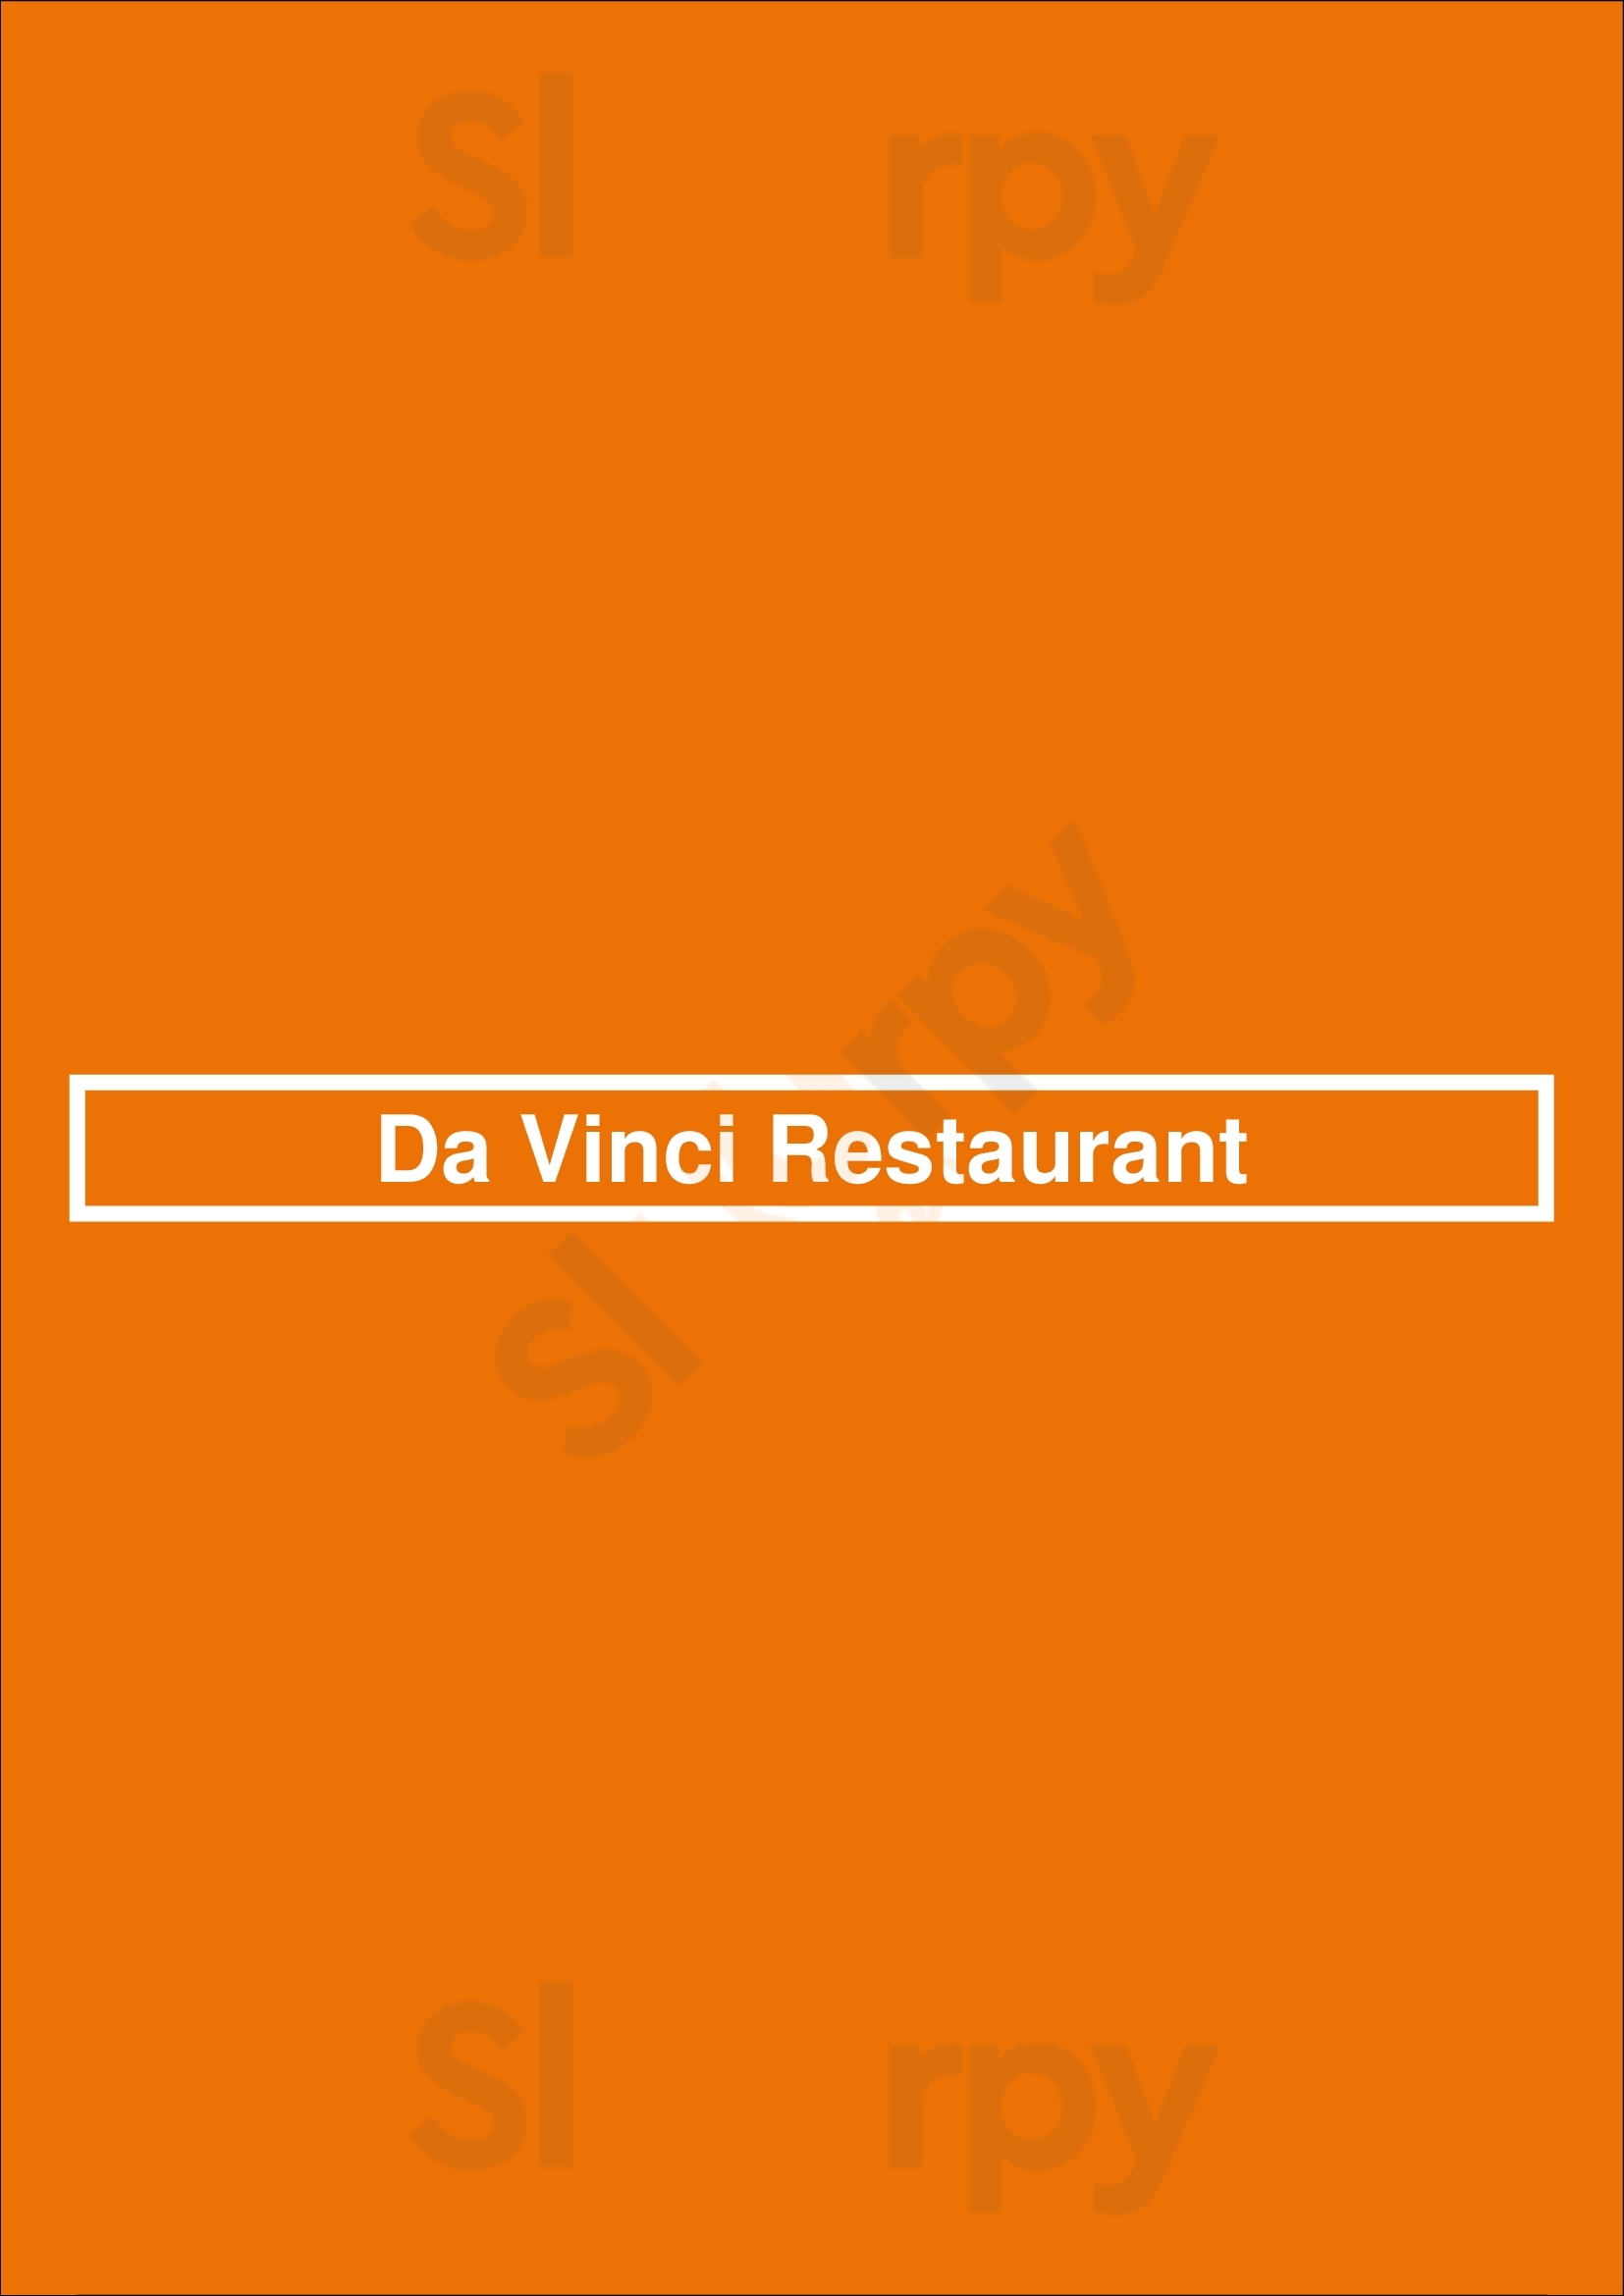 Da Vinci Restaurant Montreal Menu - 1